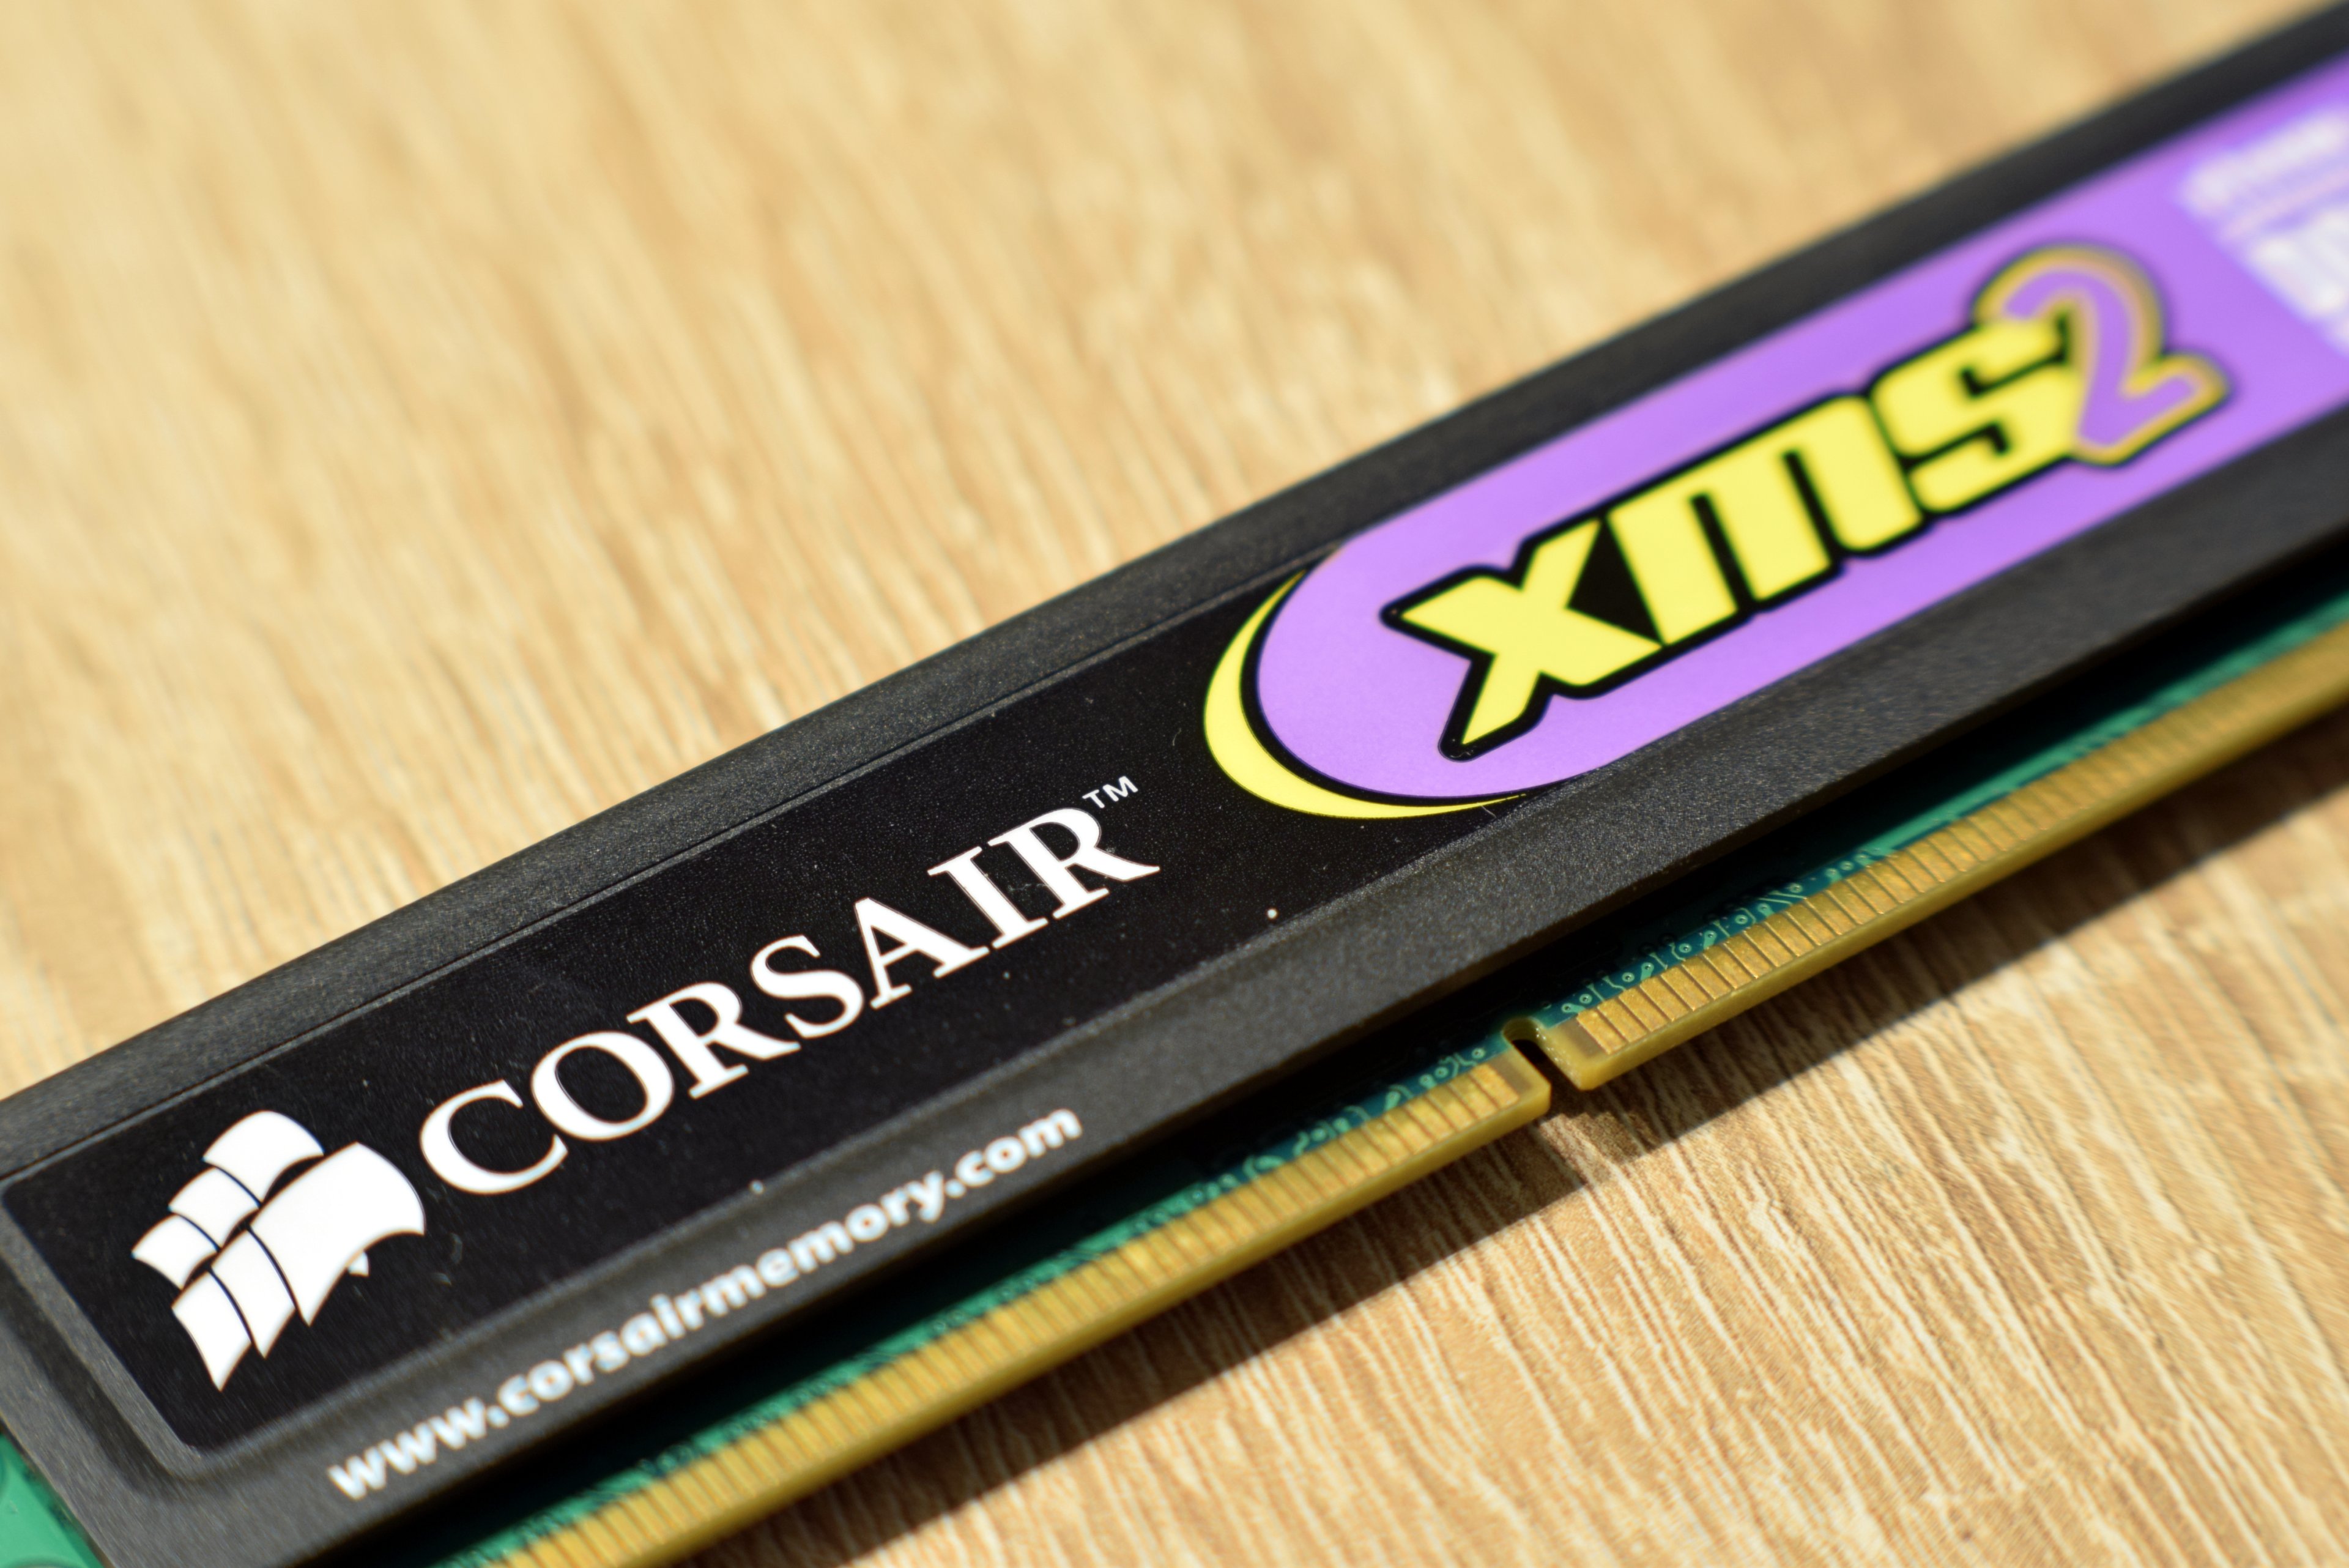 Corsair XMS2 DDR2 RAM (19).JPG